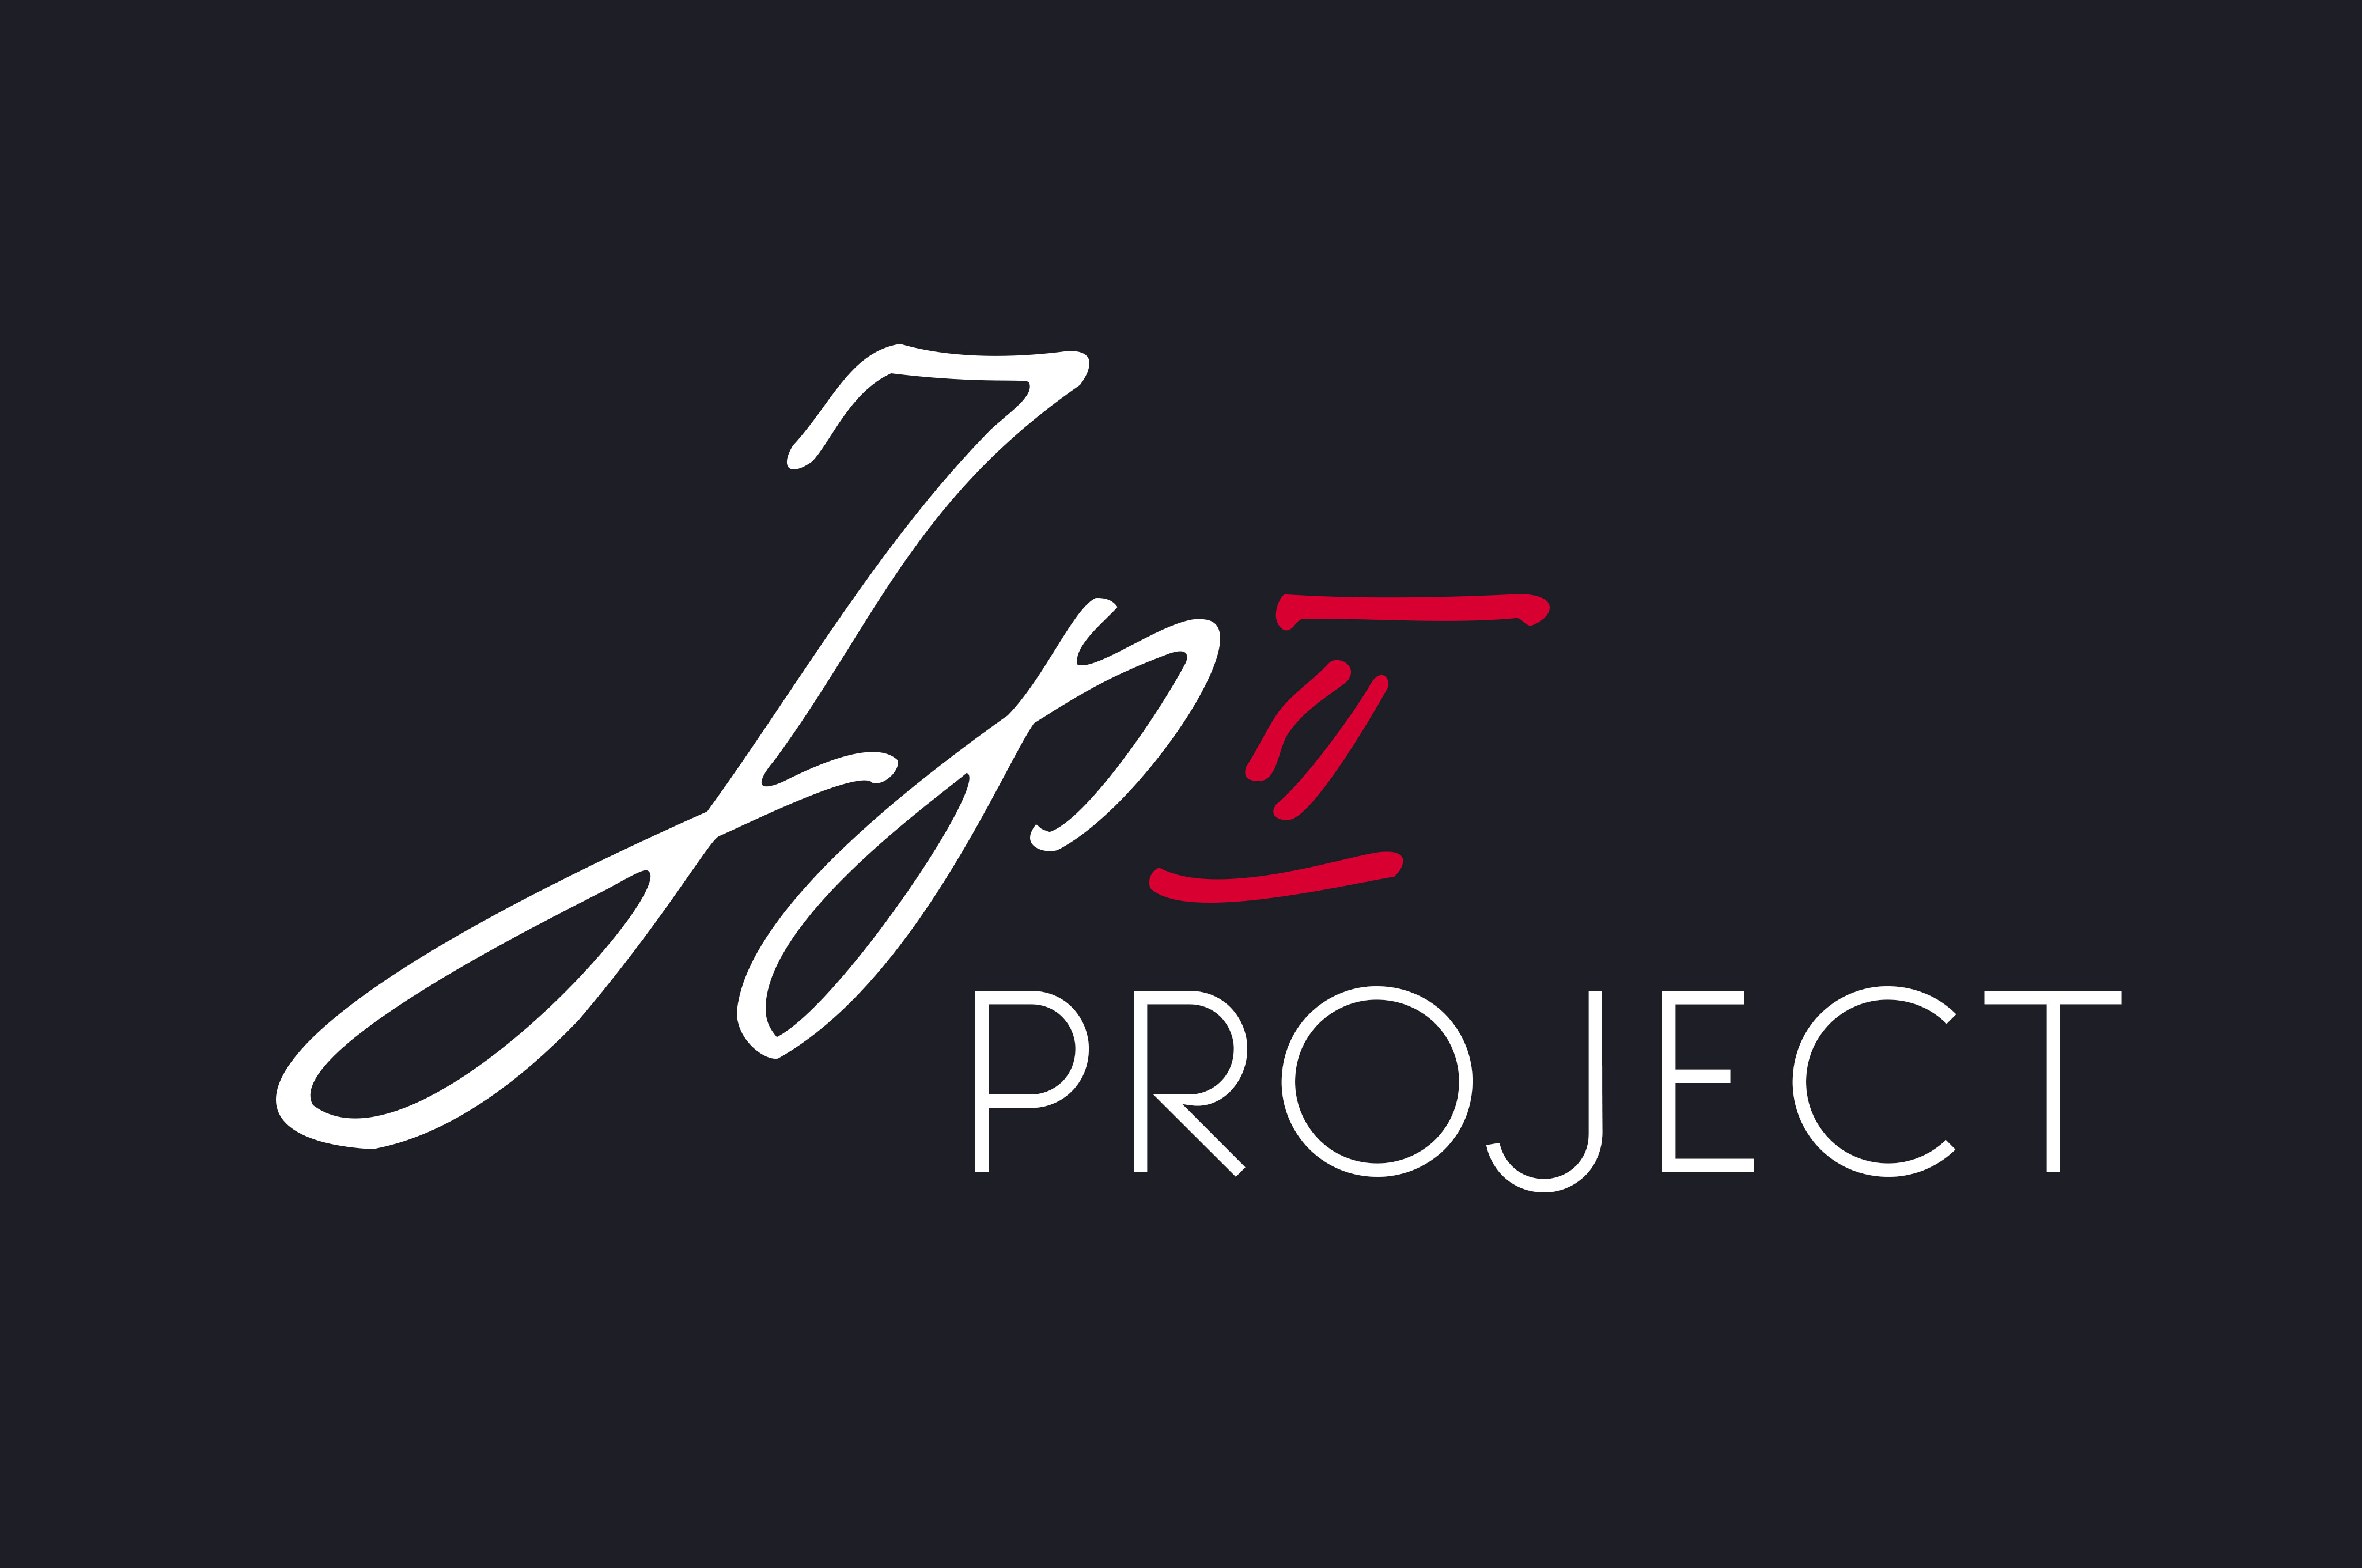 The John Paul II Project logo